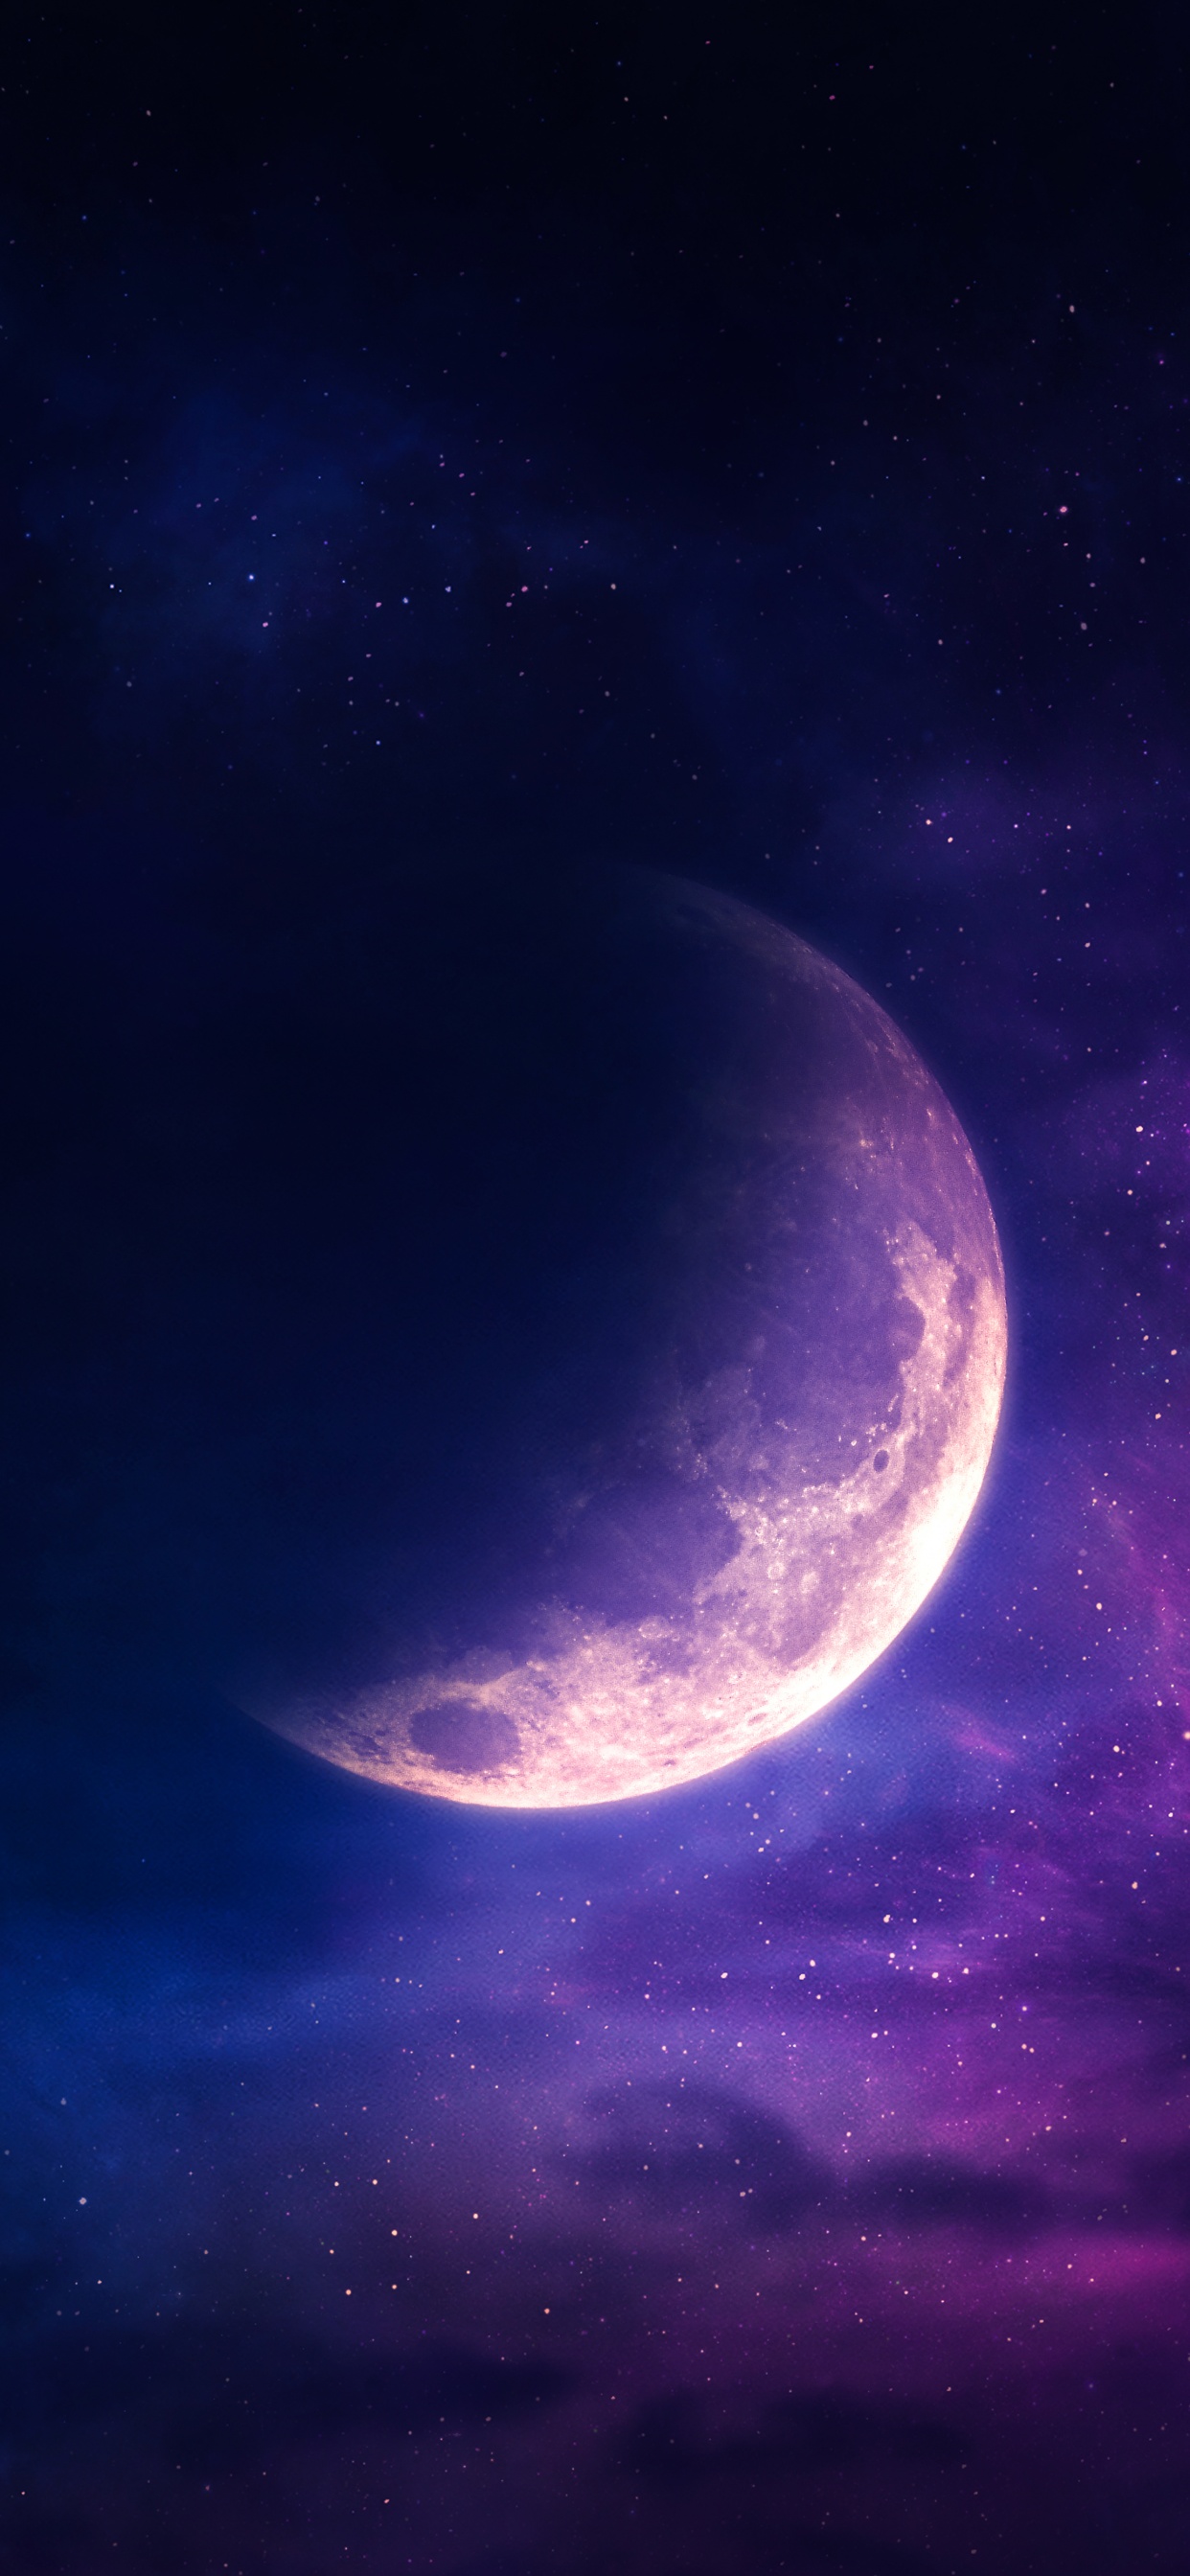 Wallpaper on Twitter 4k wallpaper for your smartphone Sky Moon Purple  httpstcoOXZt6NGys5  Twitter